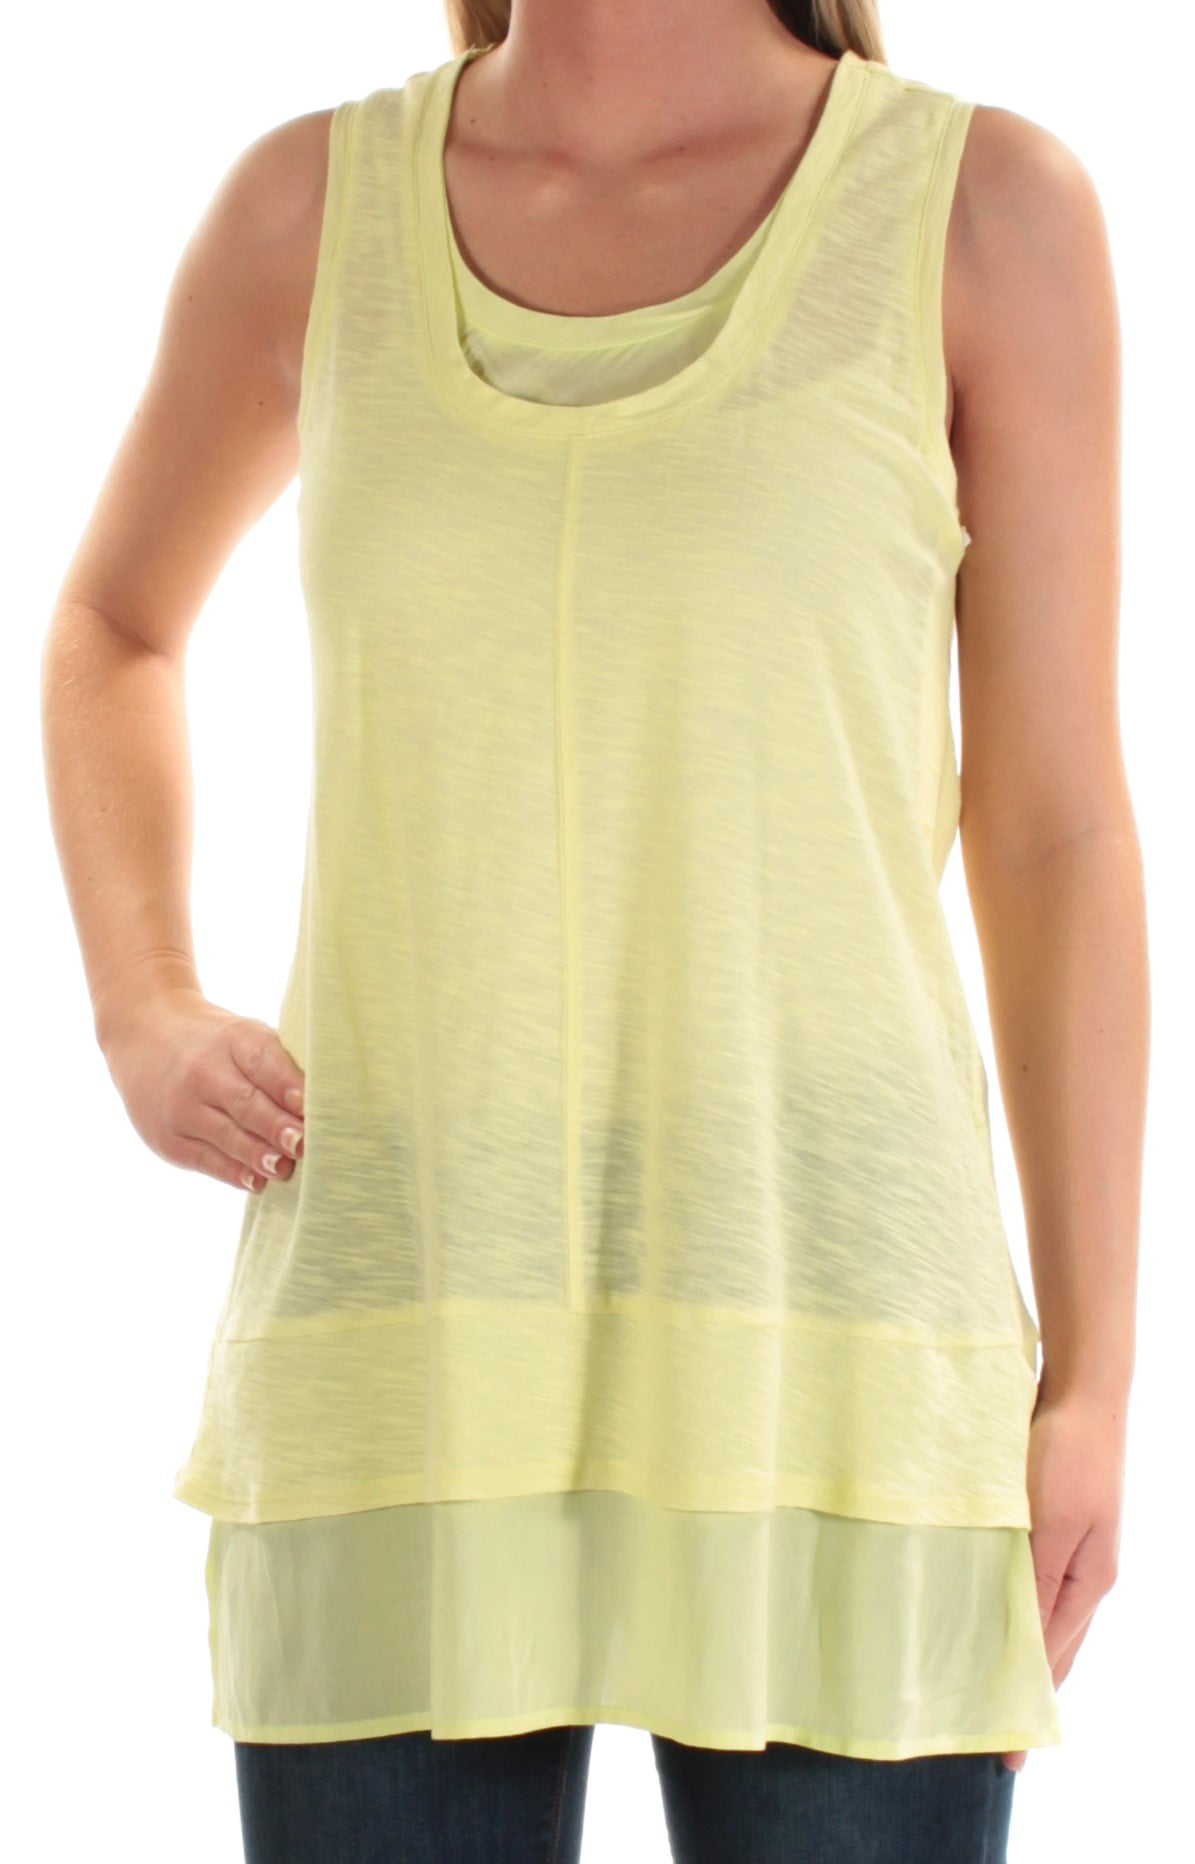 VINCE CAMUTO Womens Green Sleeveless Jewel Neck Top Size: 2XS - Walmart.com